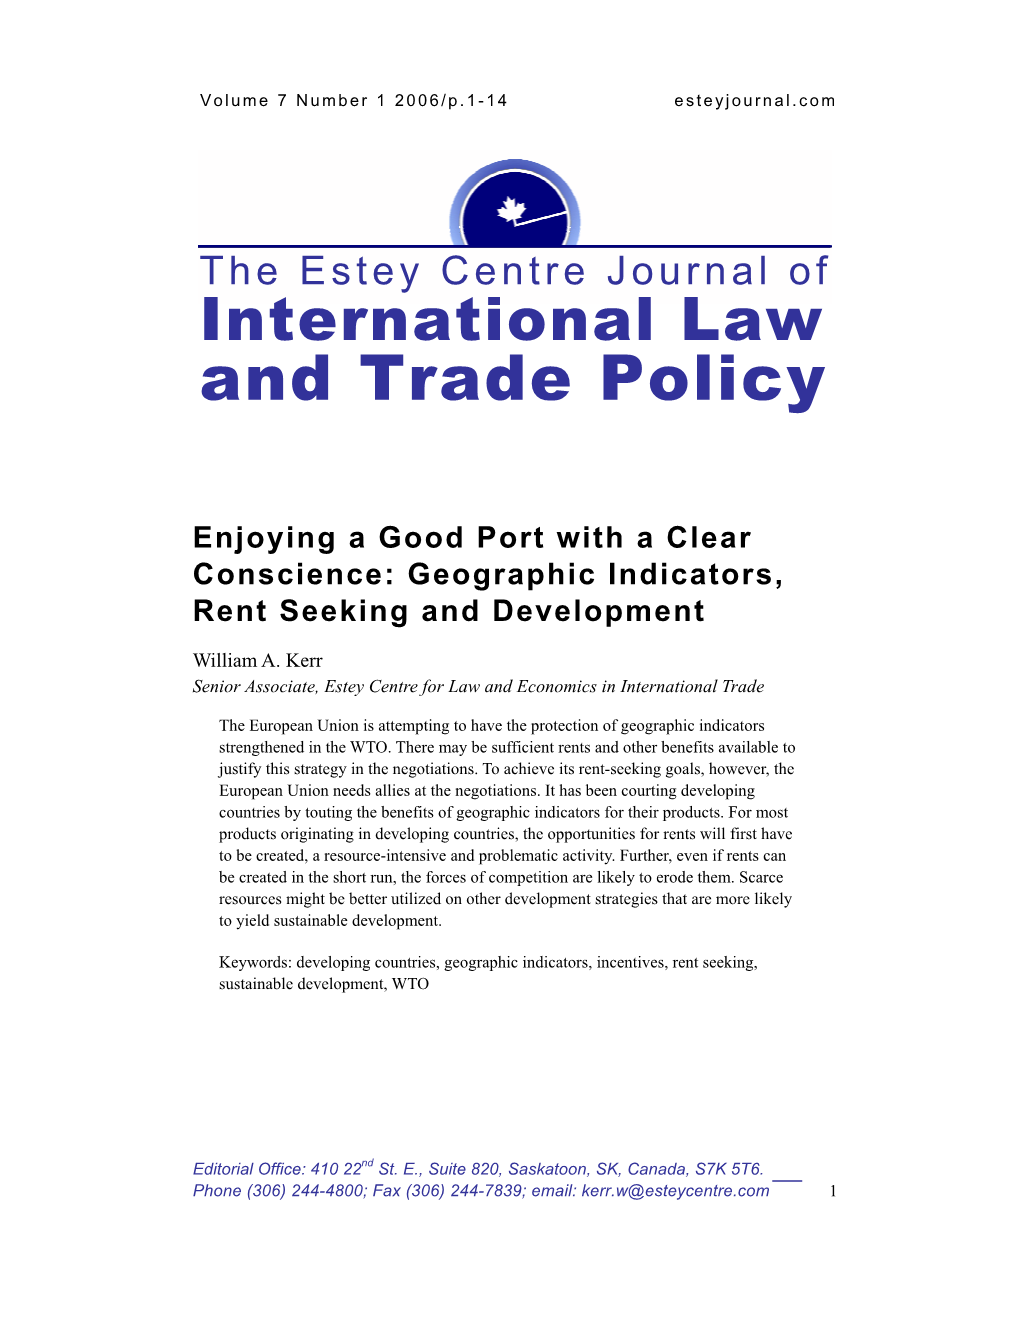 Geographical Indicators, Rent Seeking and Development